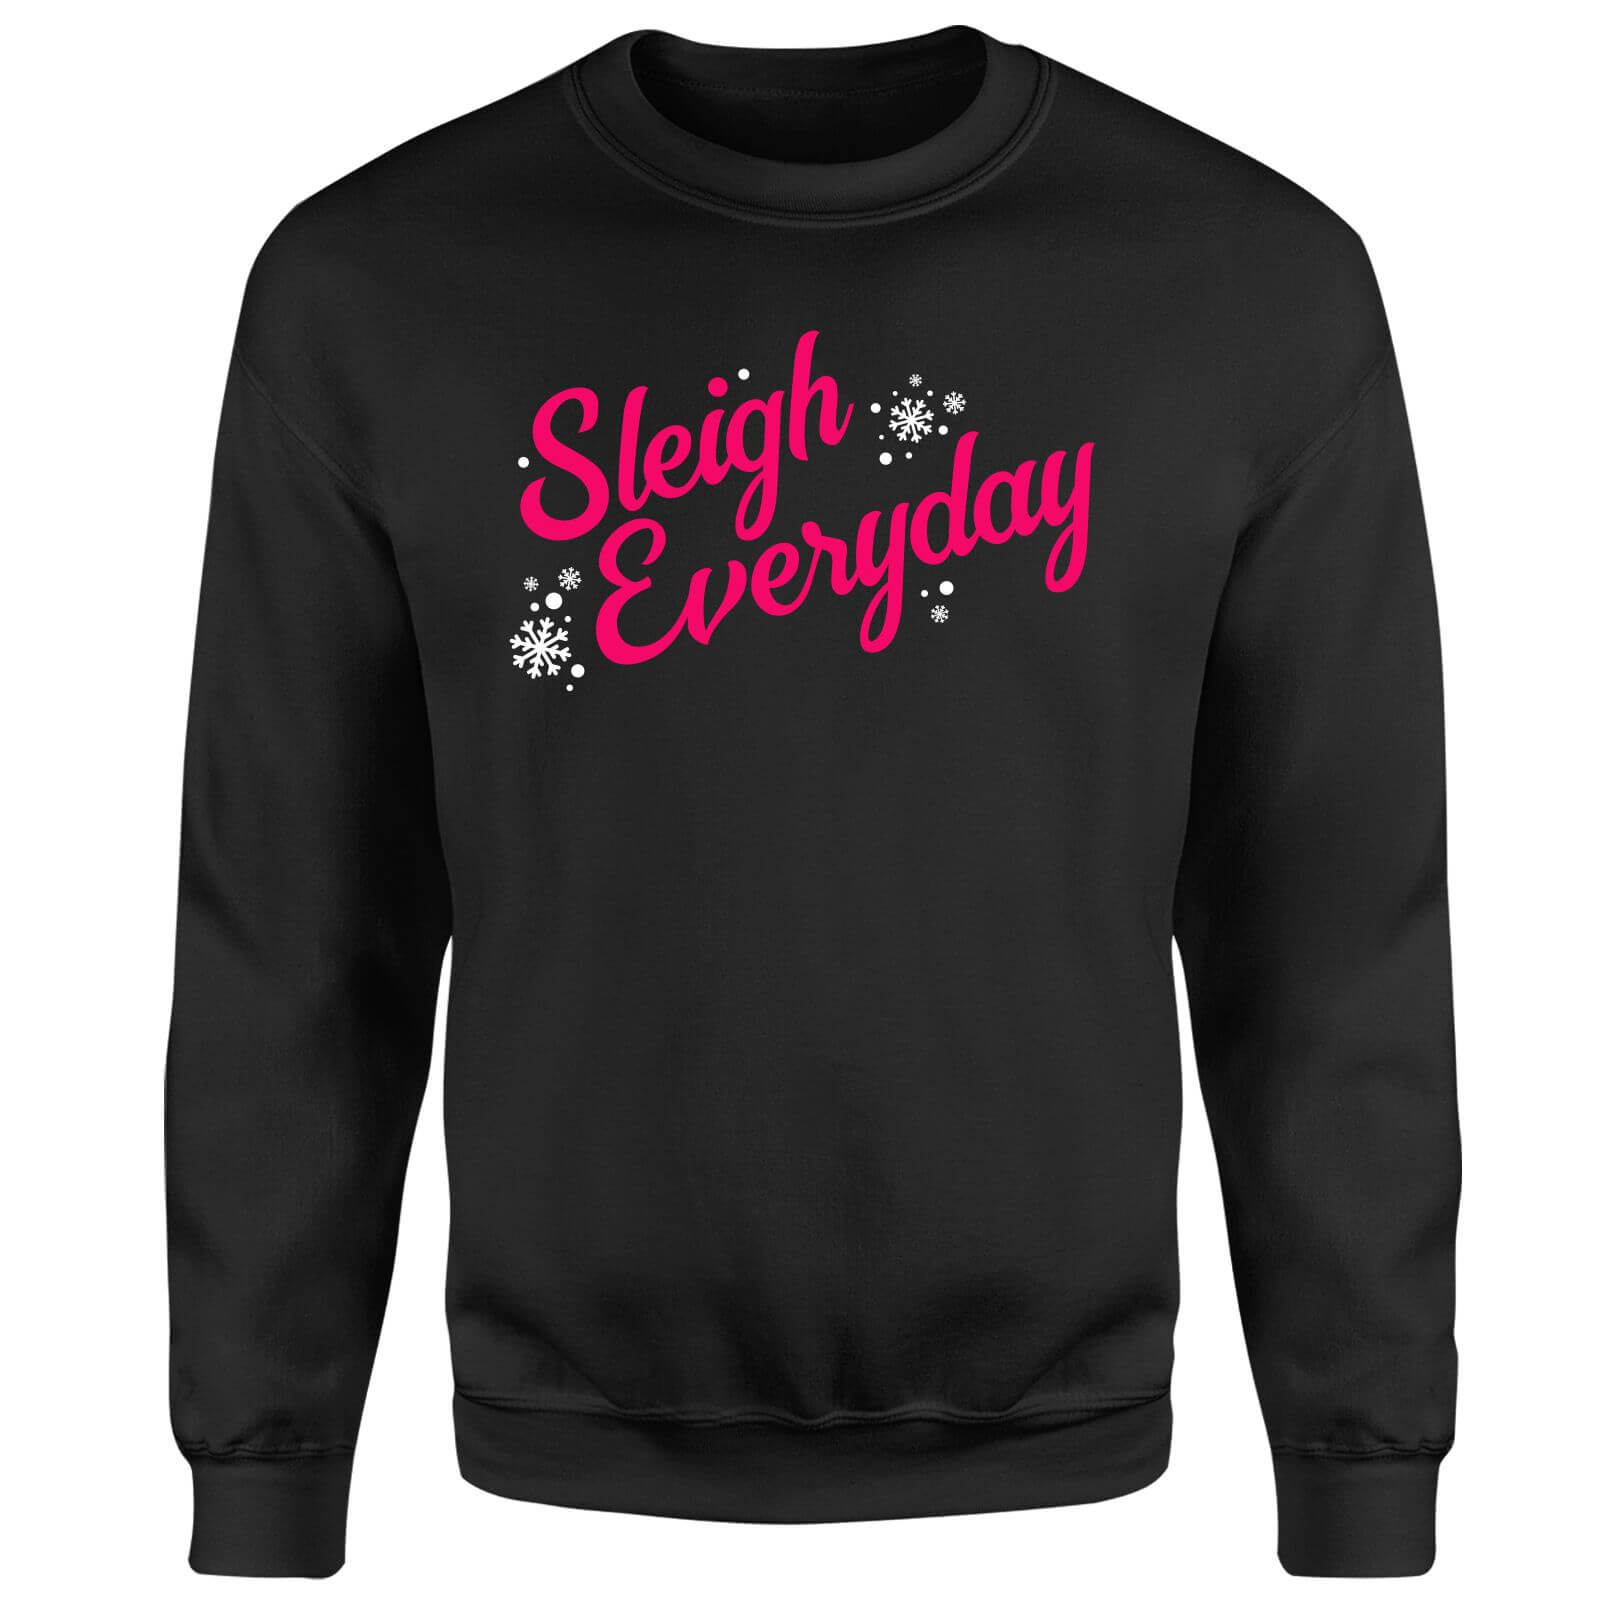 Sleigh Everyday Unisex Sweatshirt - Black - S - Black